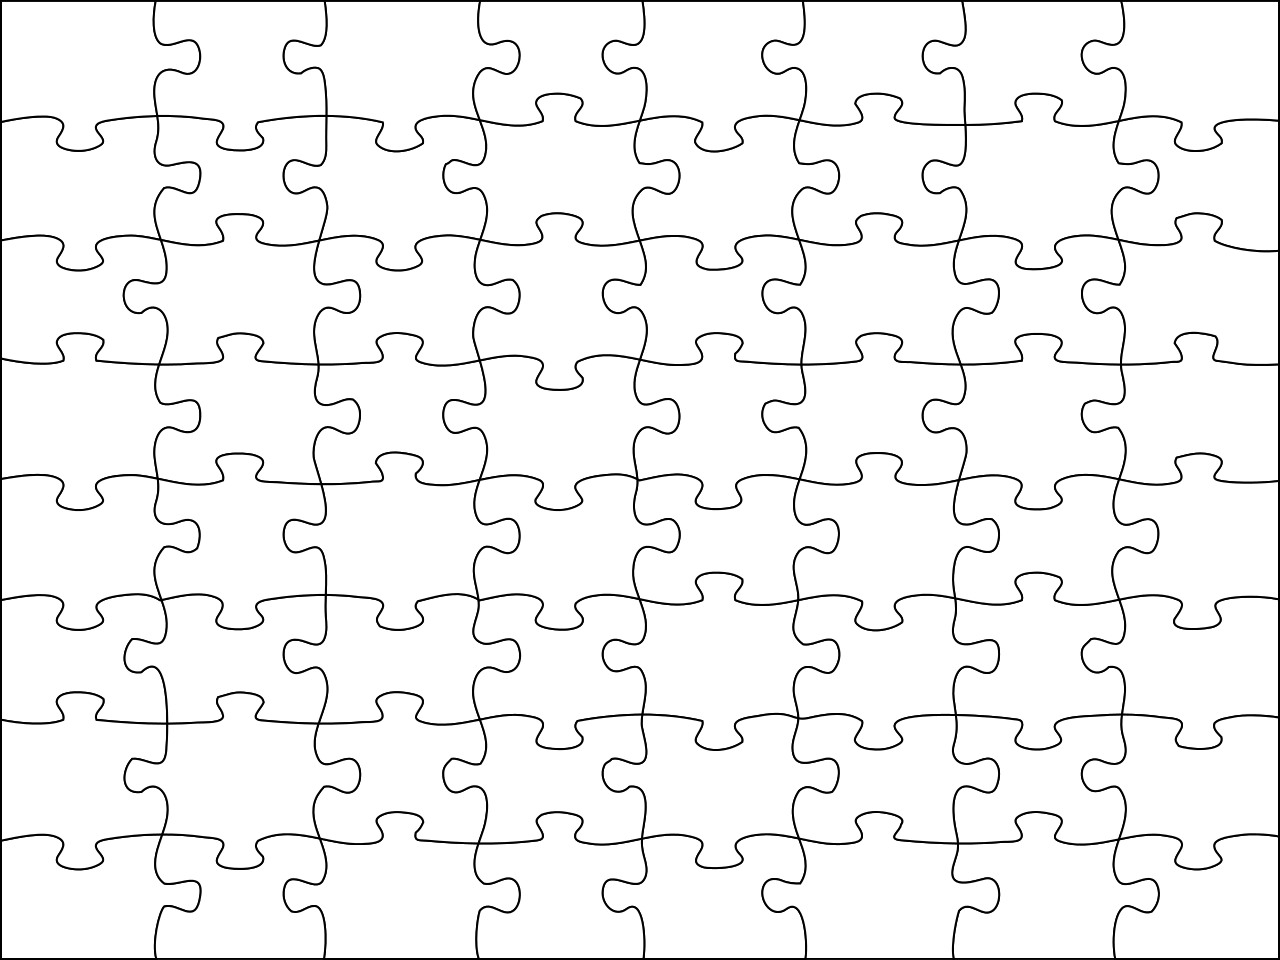 File:Jigsaw Puzzle.svg - Wikimedia Commons